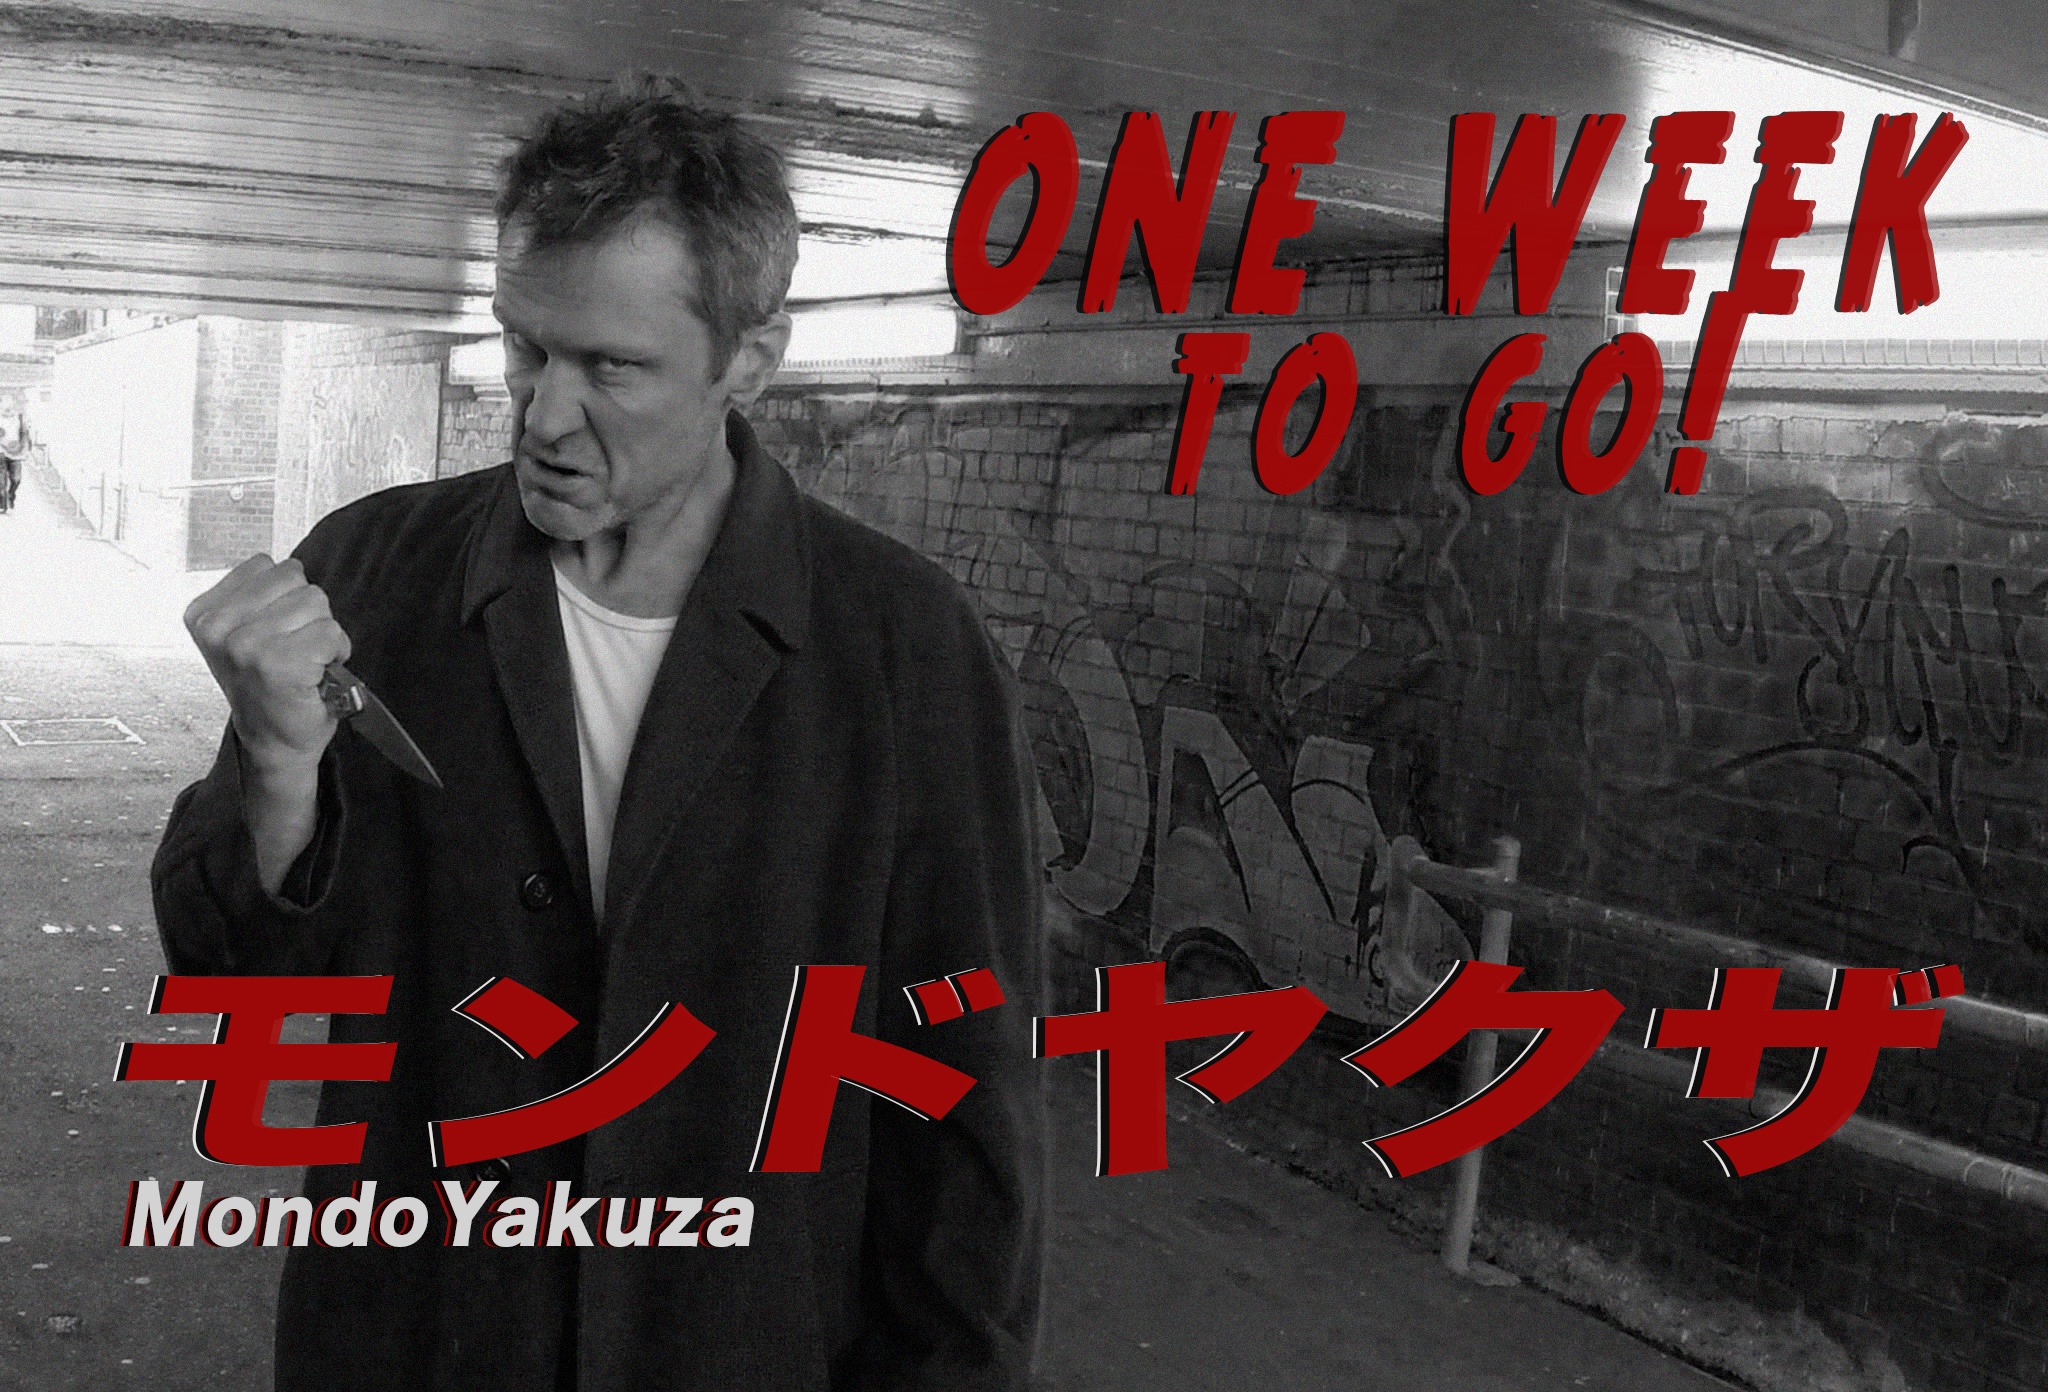 Mondo Yakuza promo photo